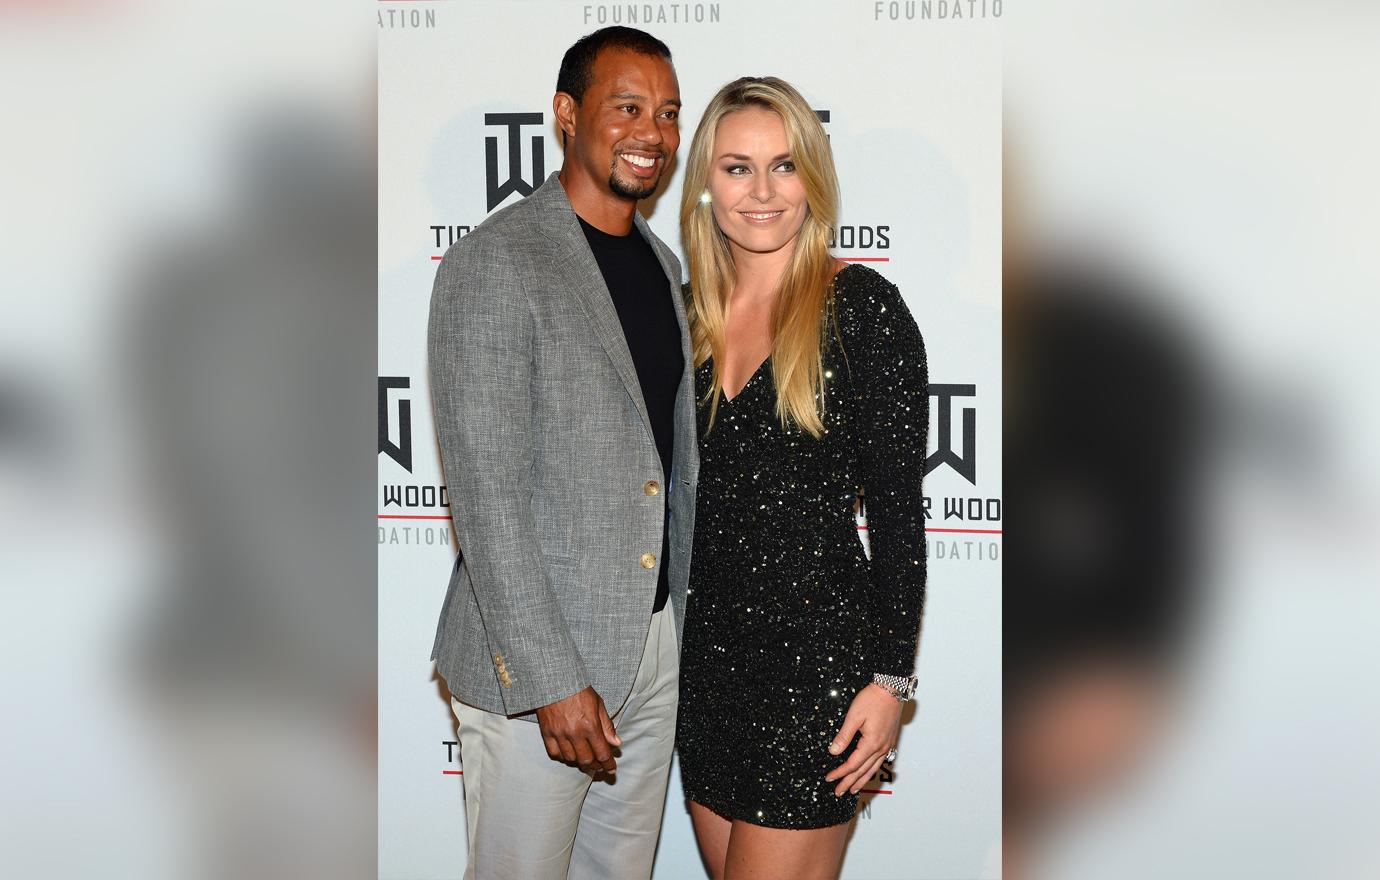 Tiger Woods New Girlfriend Dark Past Exposed!